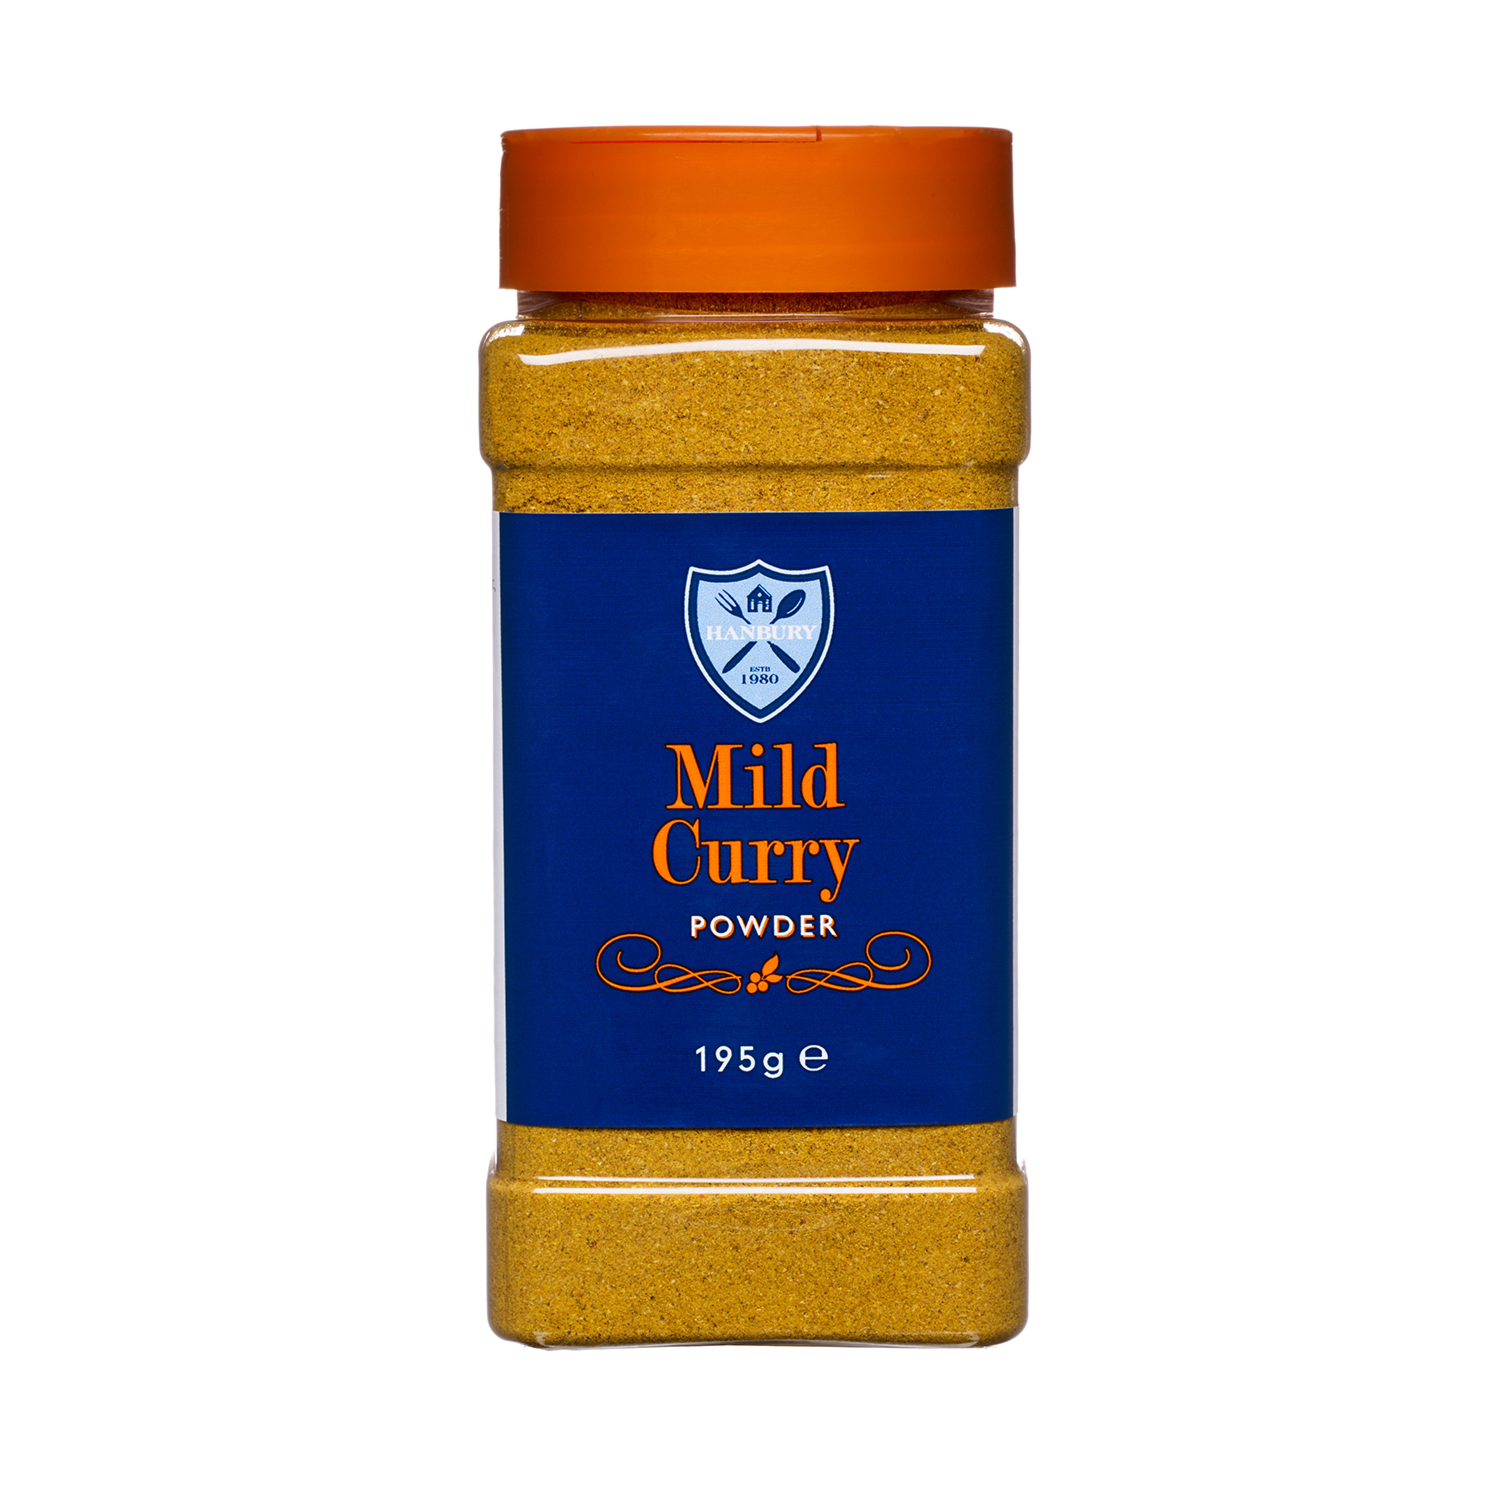 Mild Curry Powder Image